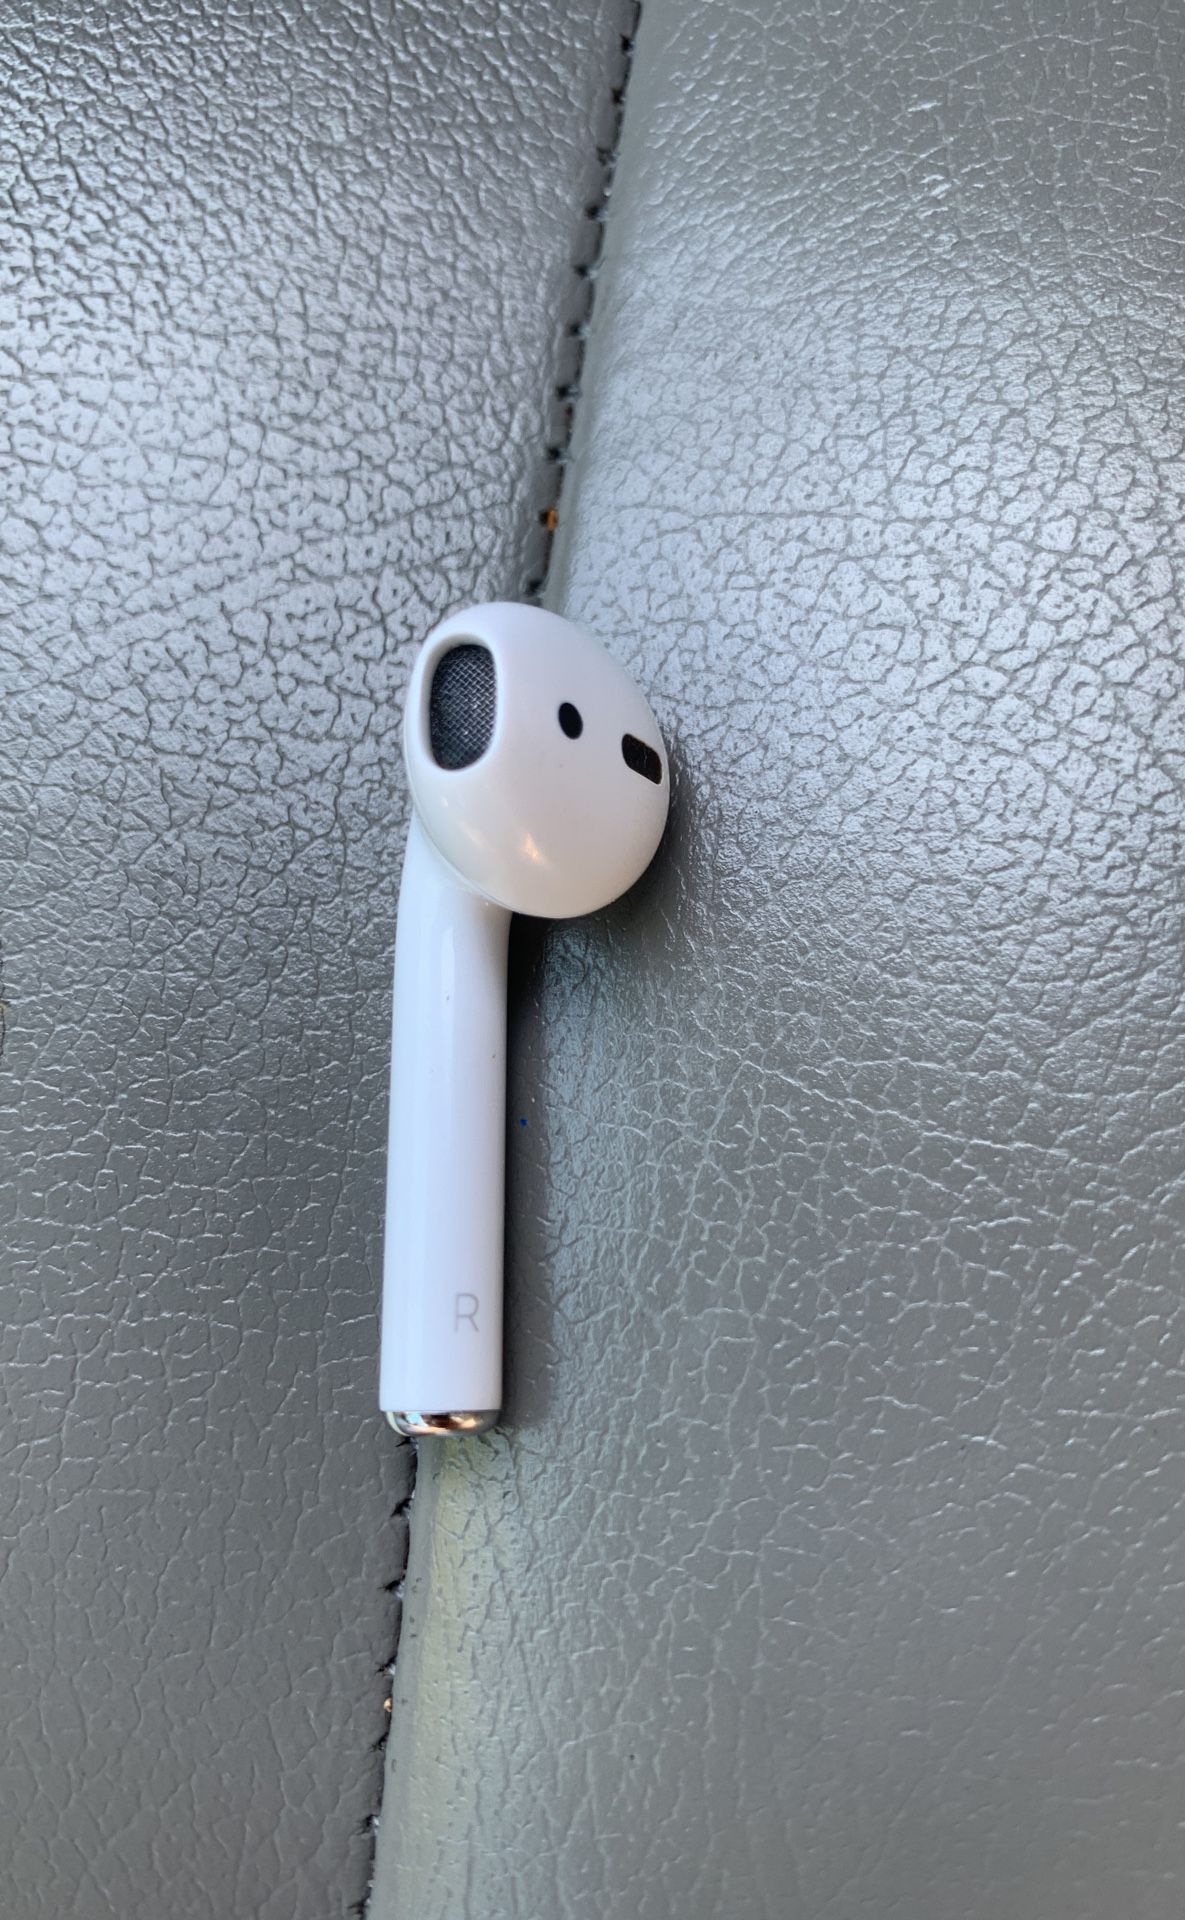 Used 1 Gen original Apple AirPod right side earbud.